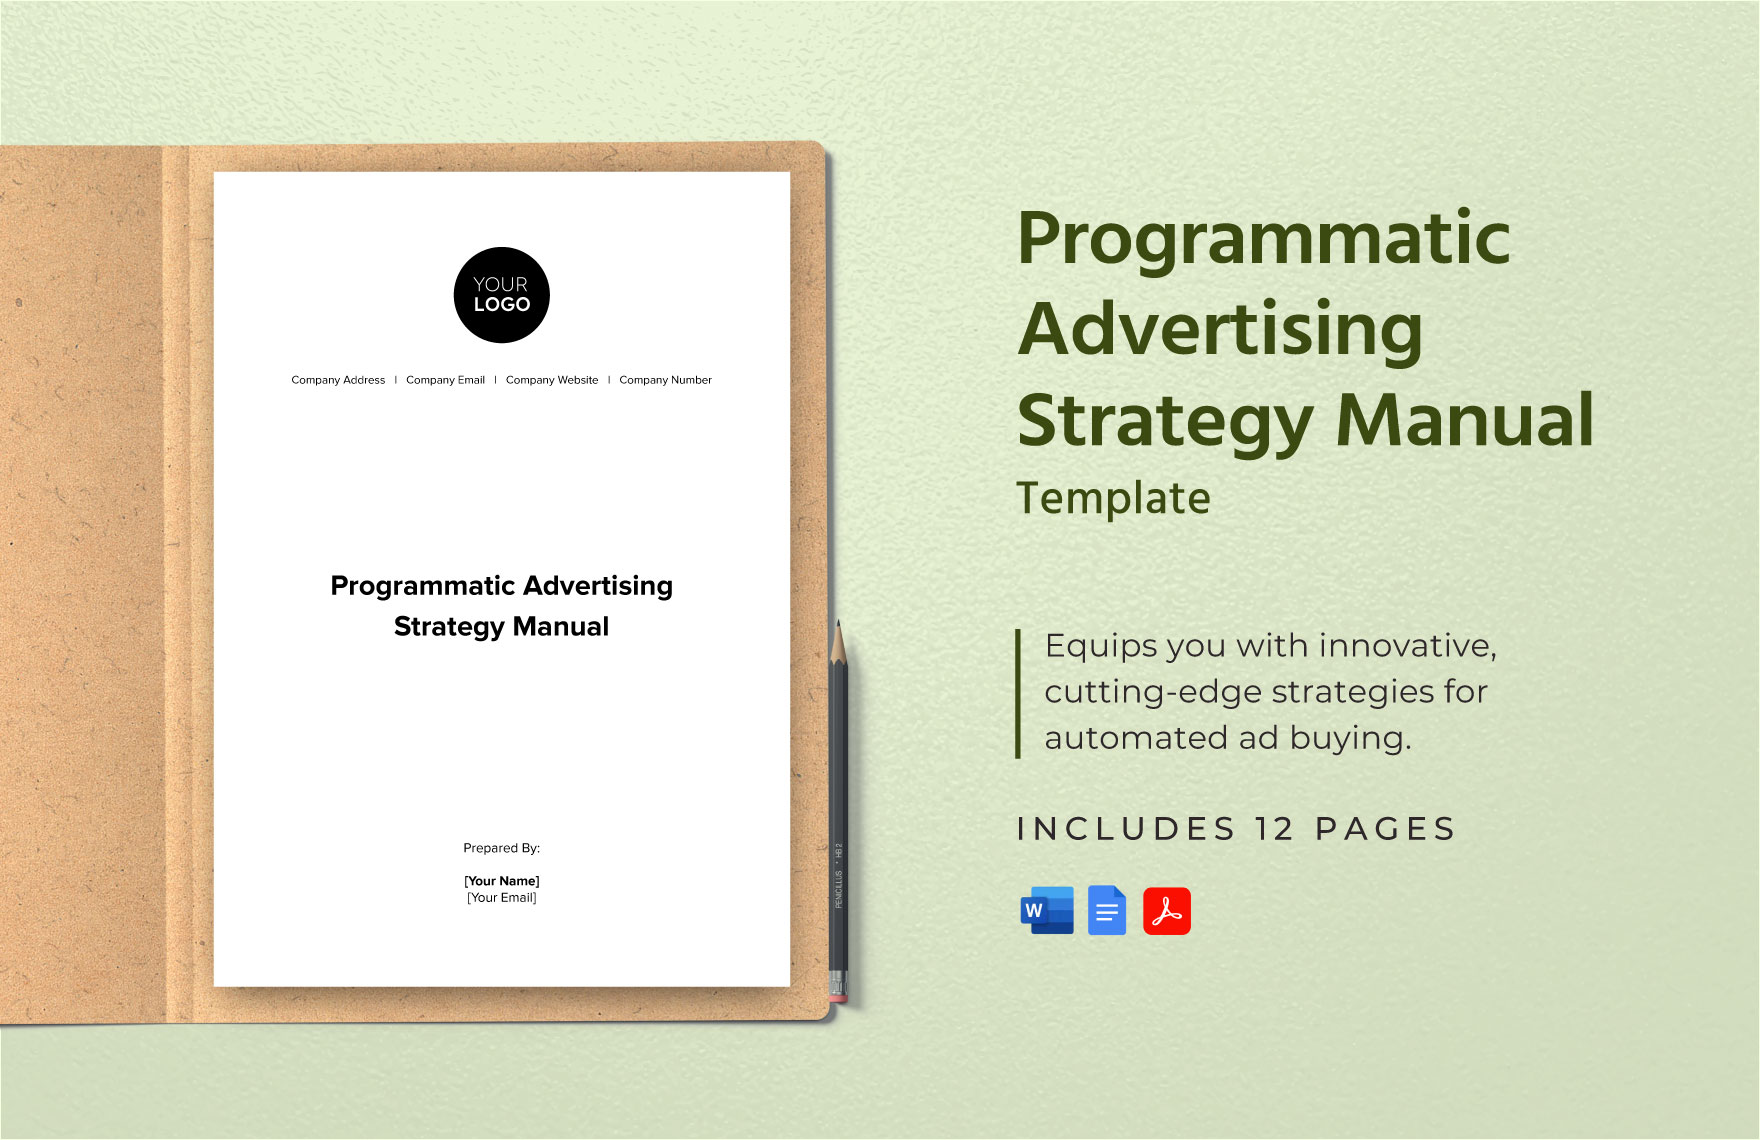 Programmatic Advertising Strategy Manual Template